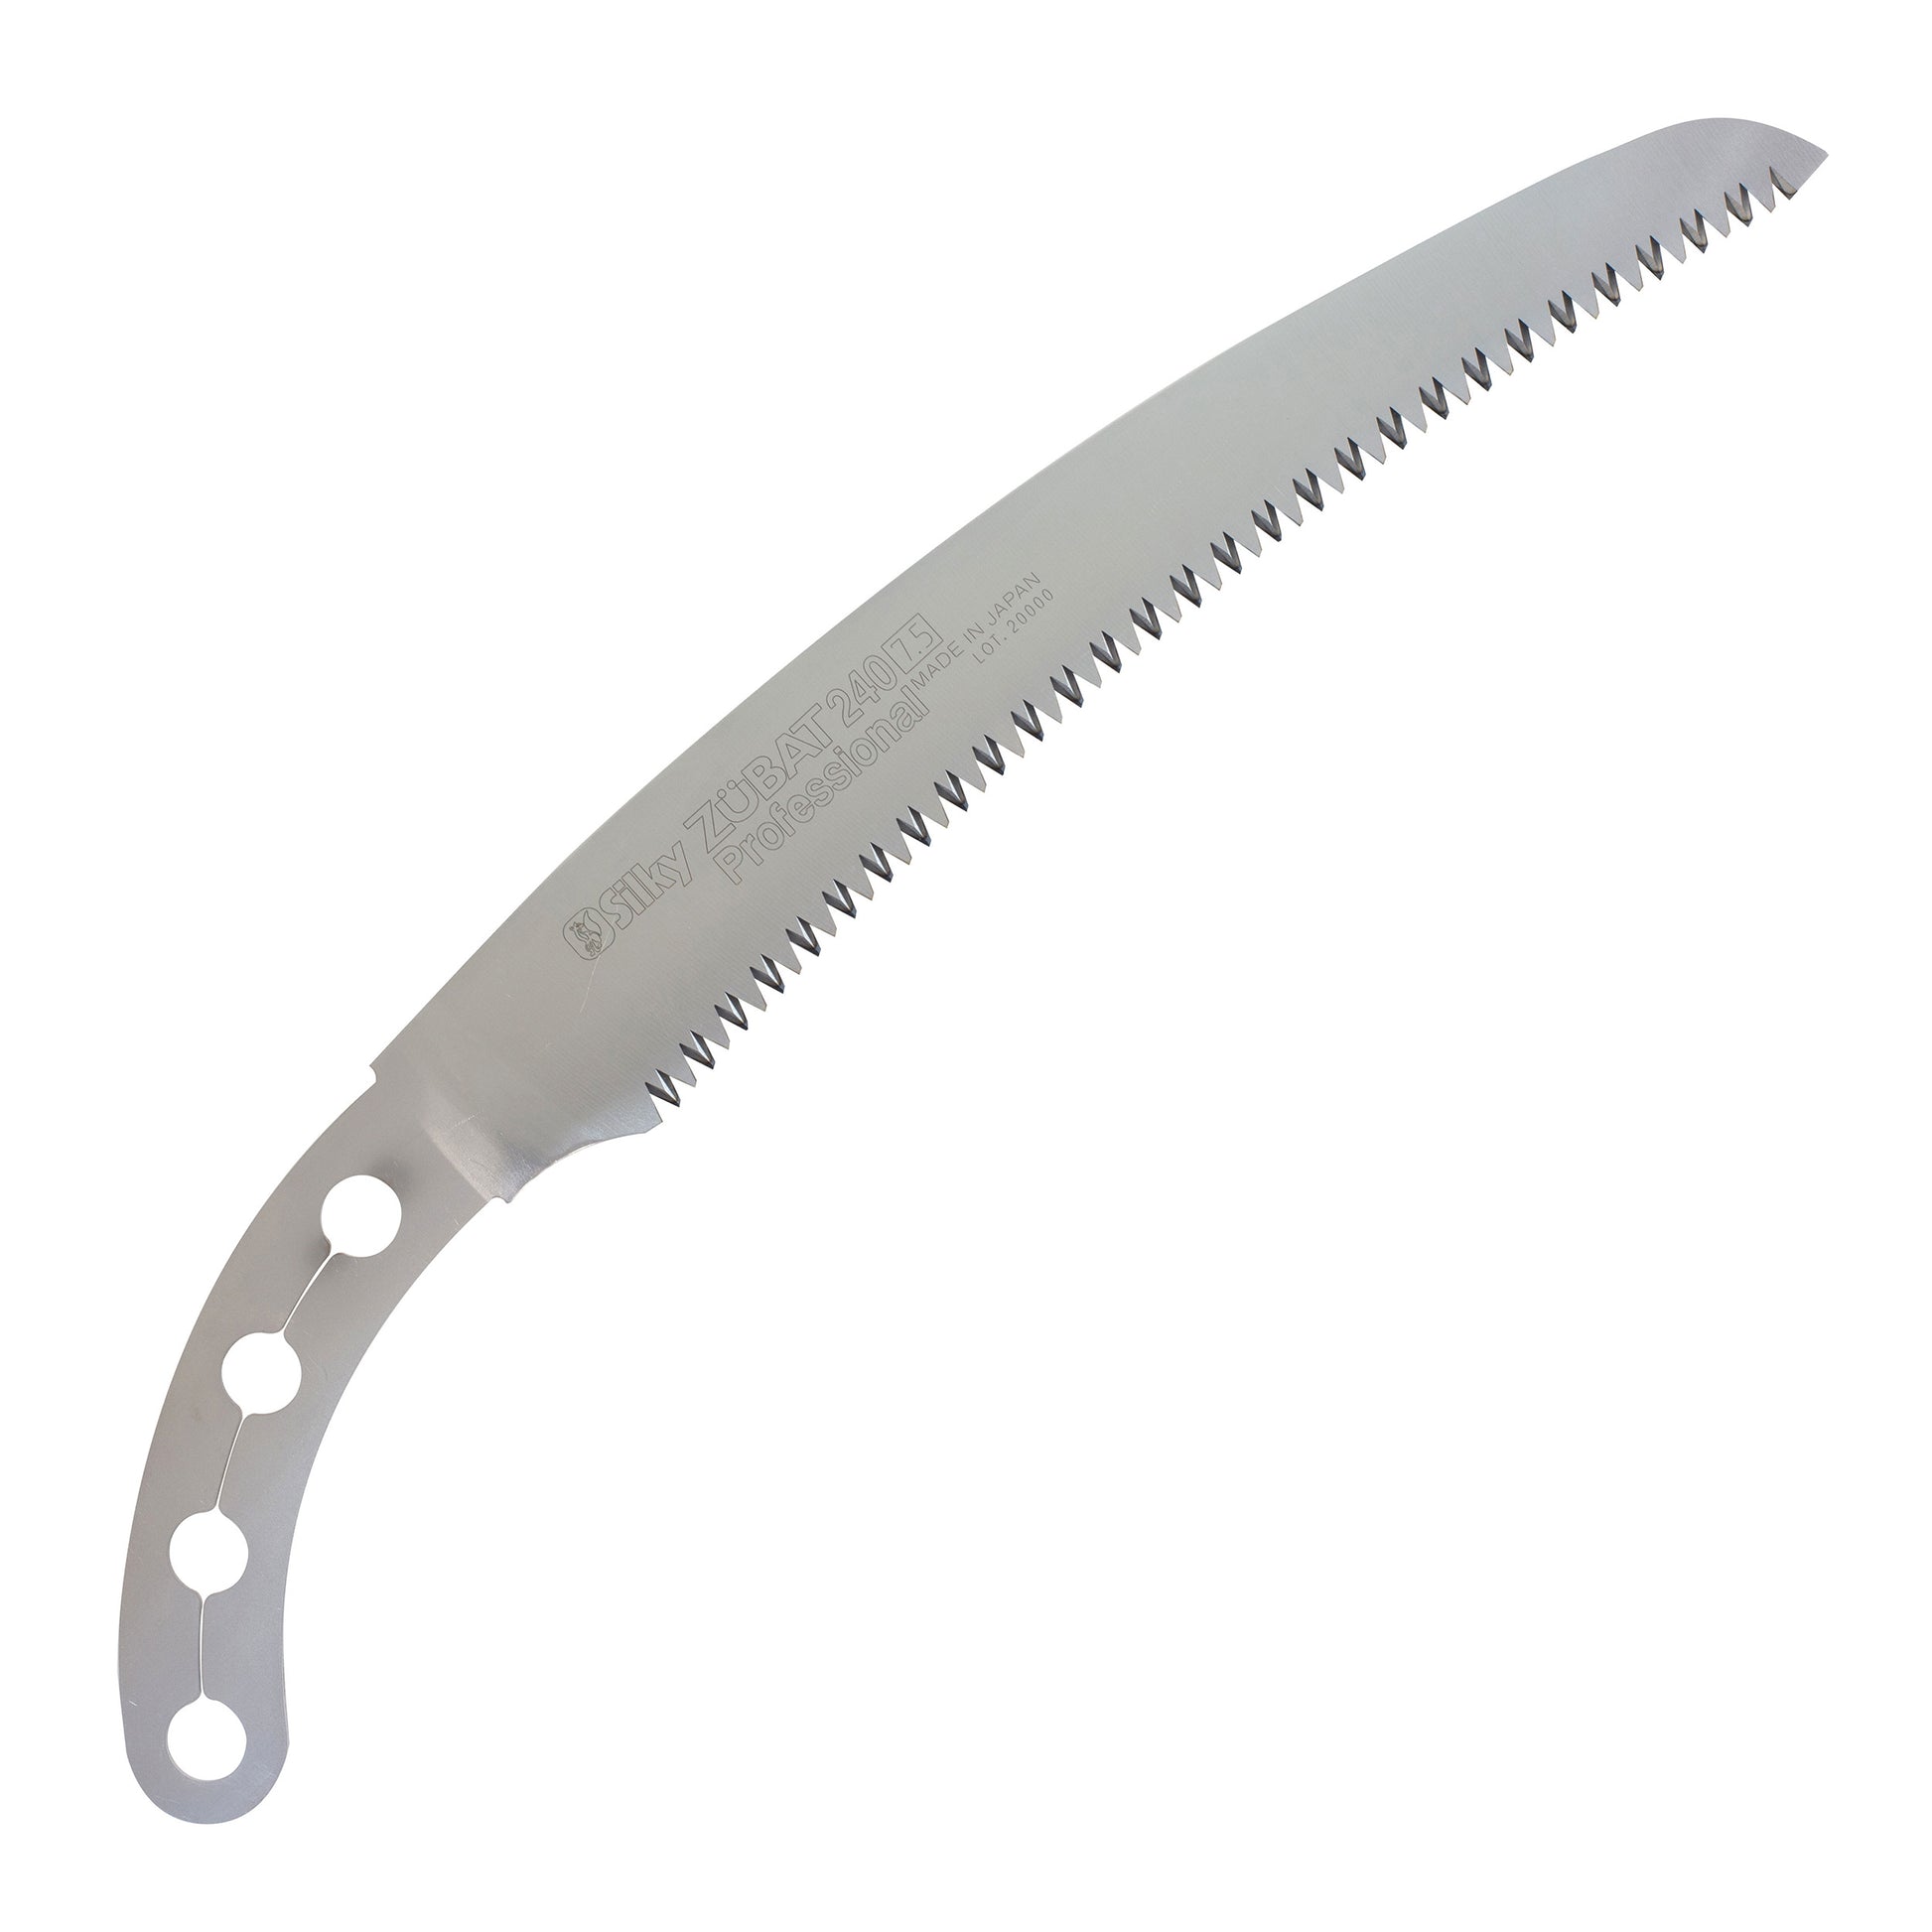 ZUBAT Replacement Blade, 240mm, Large Teeth alt 0